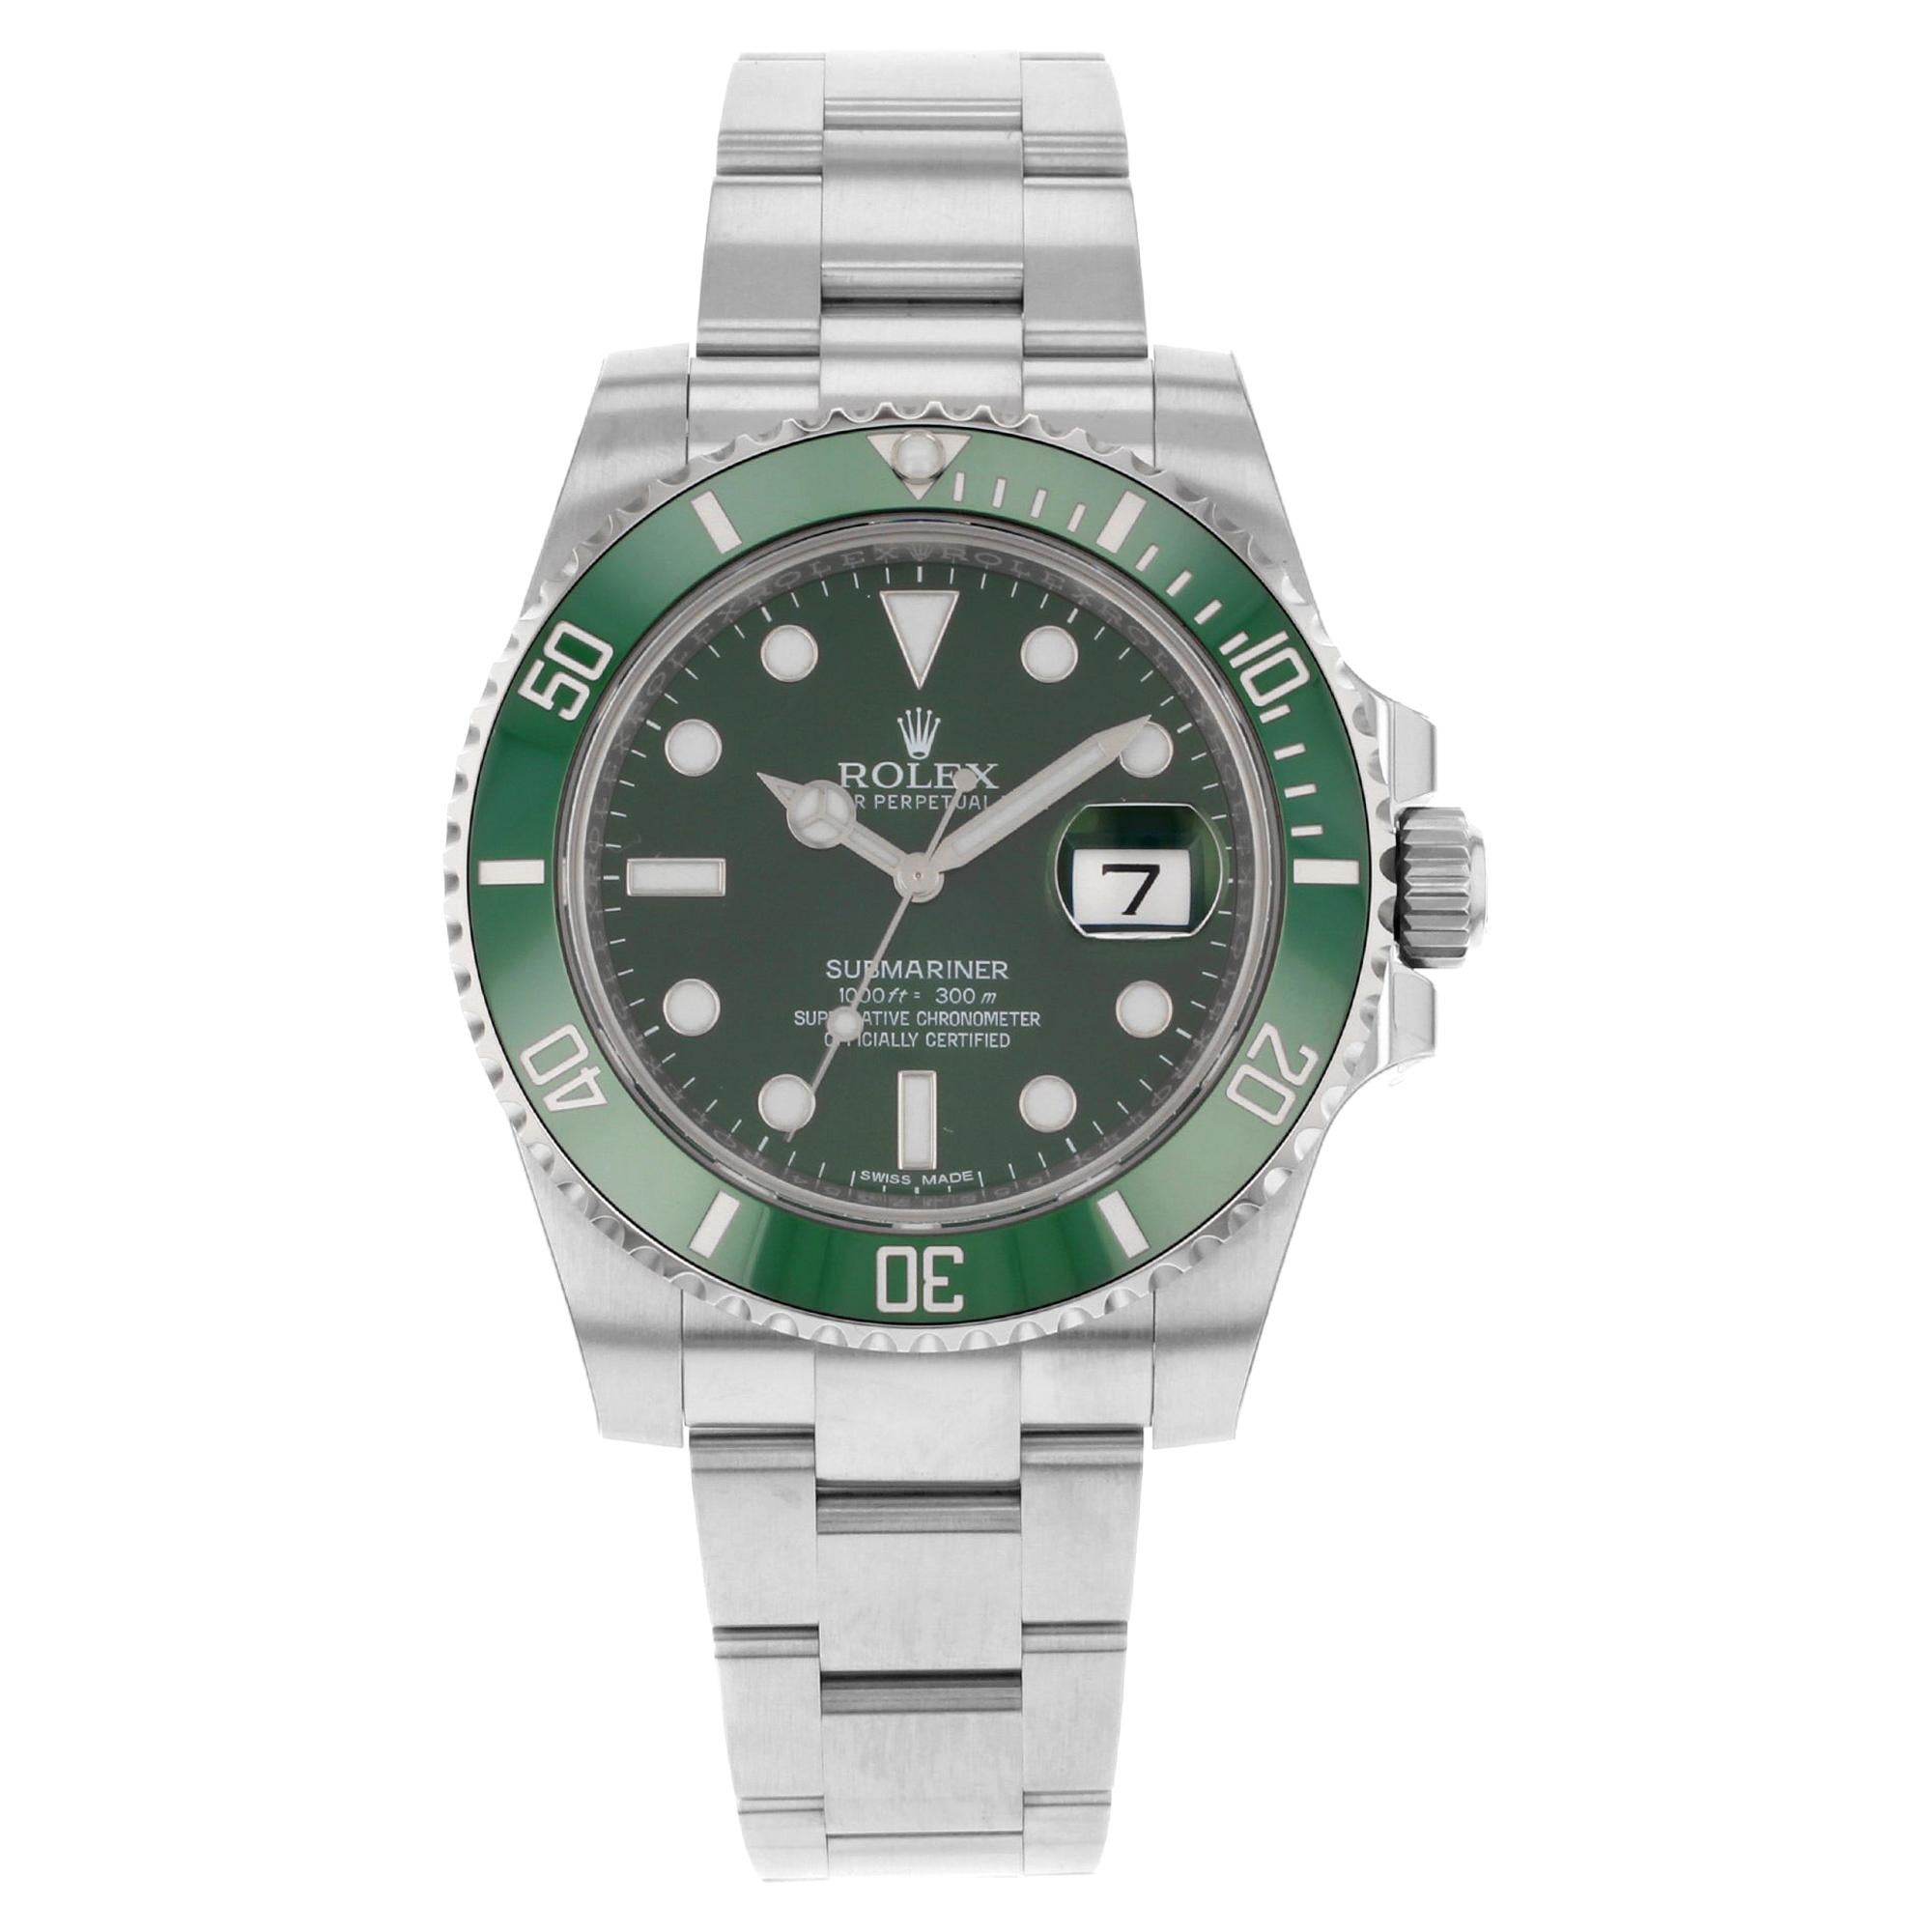 Rolex Submariner Steel Ceramic Hulk Green Dial Automatic Men's Watch 116610LV